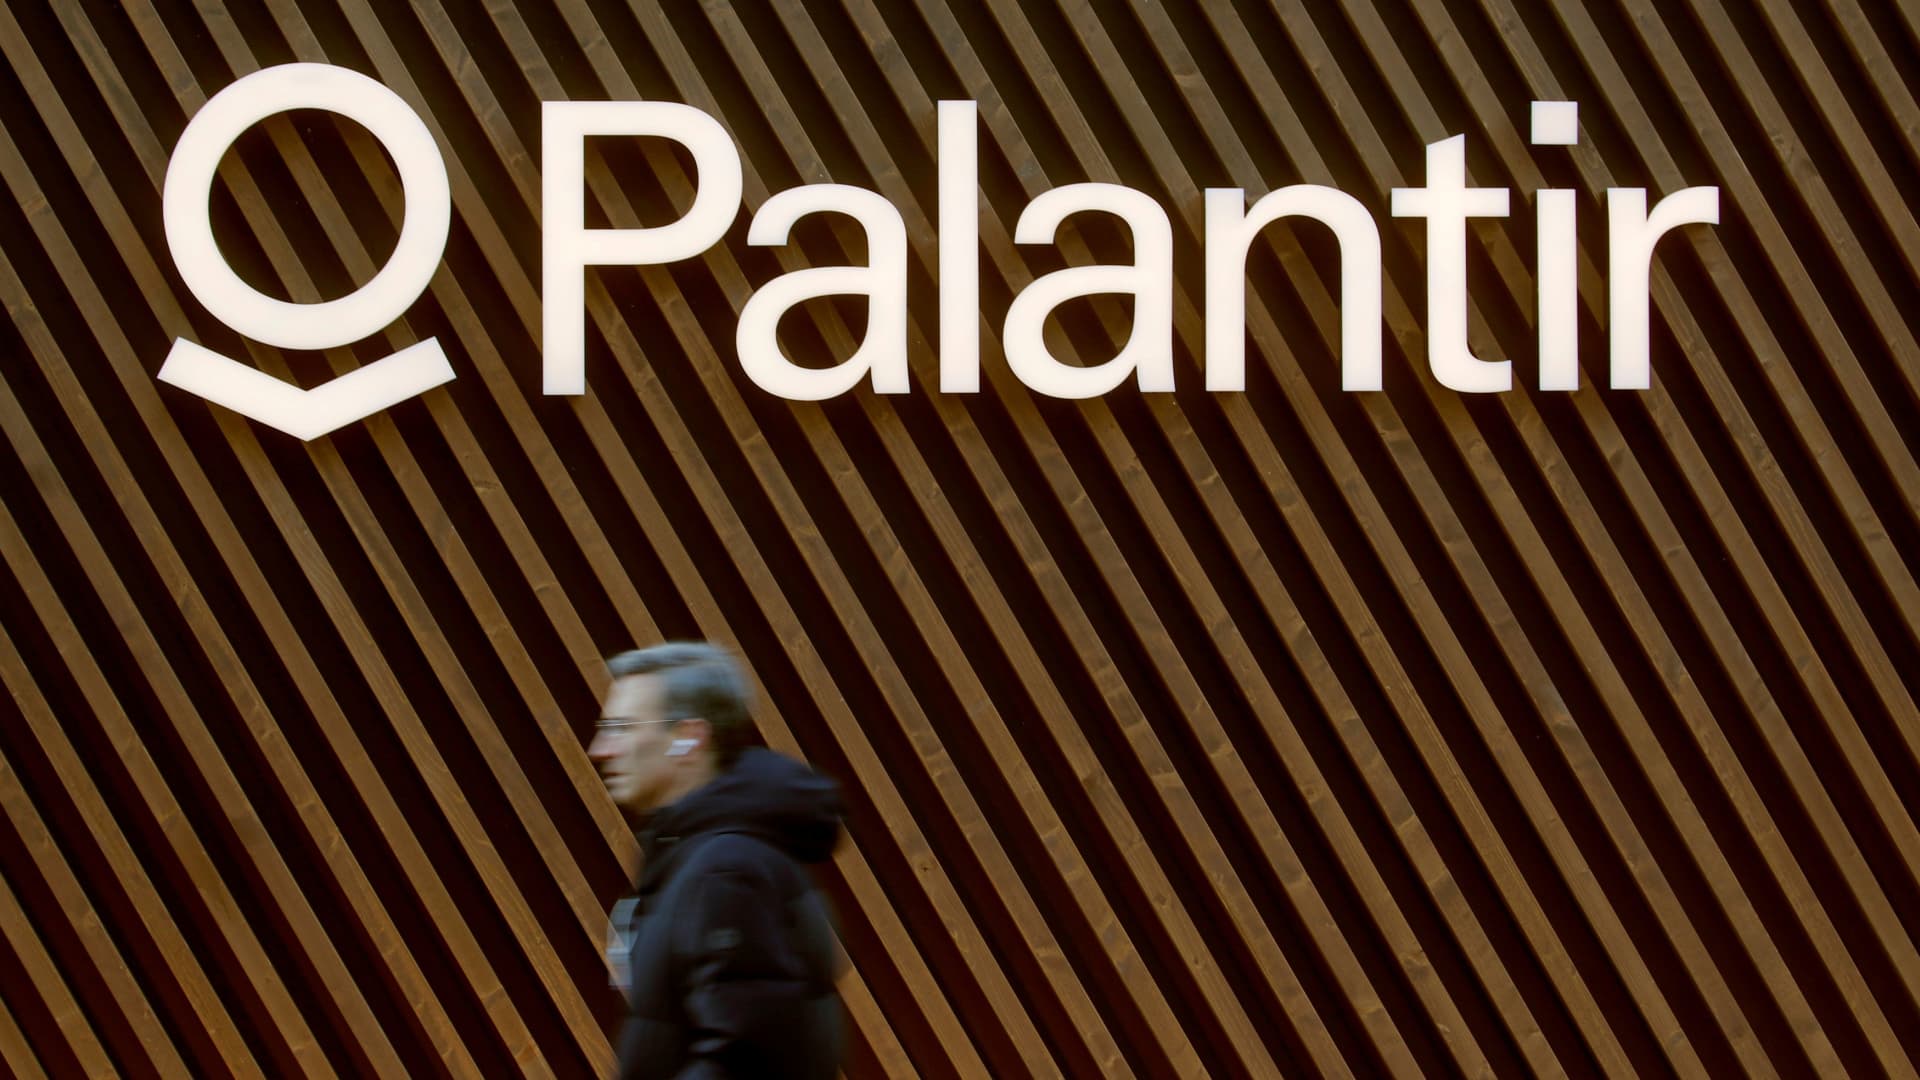 Palantir shares rocket 25% after revenue beat, strong demand for AI